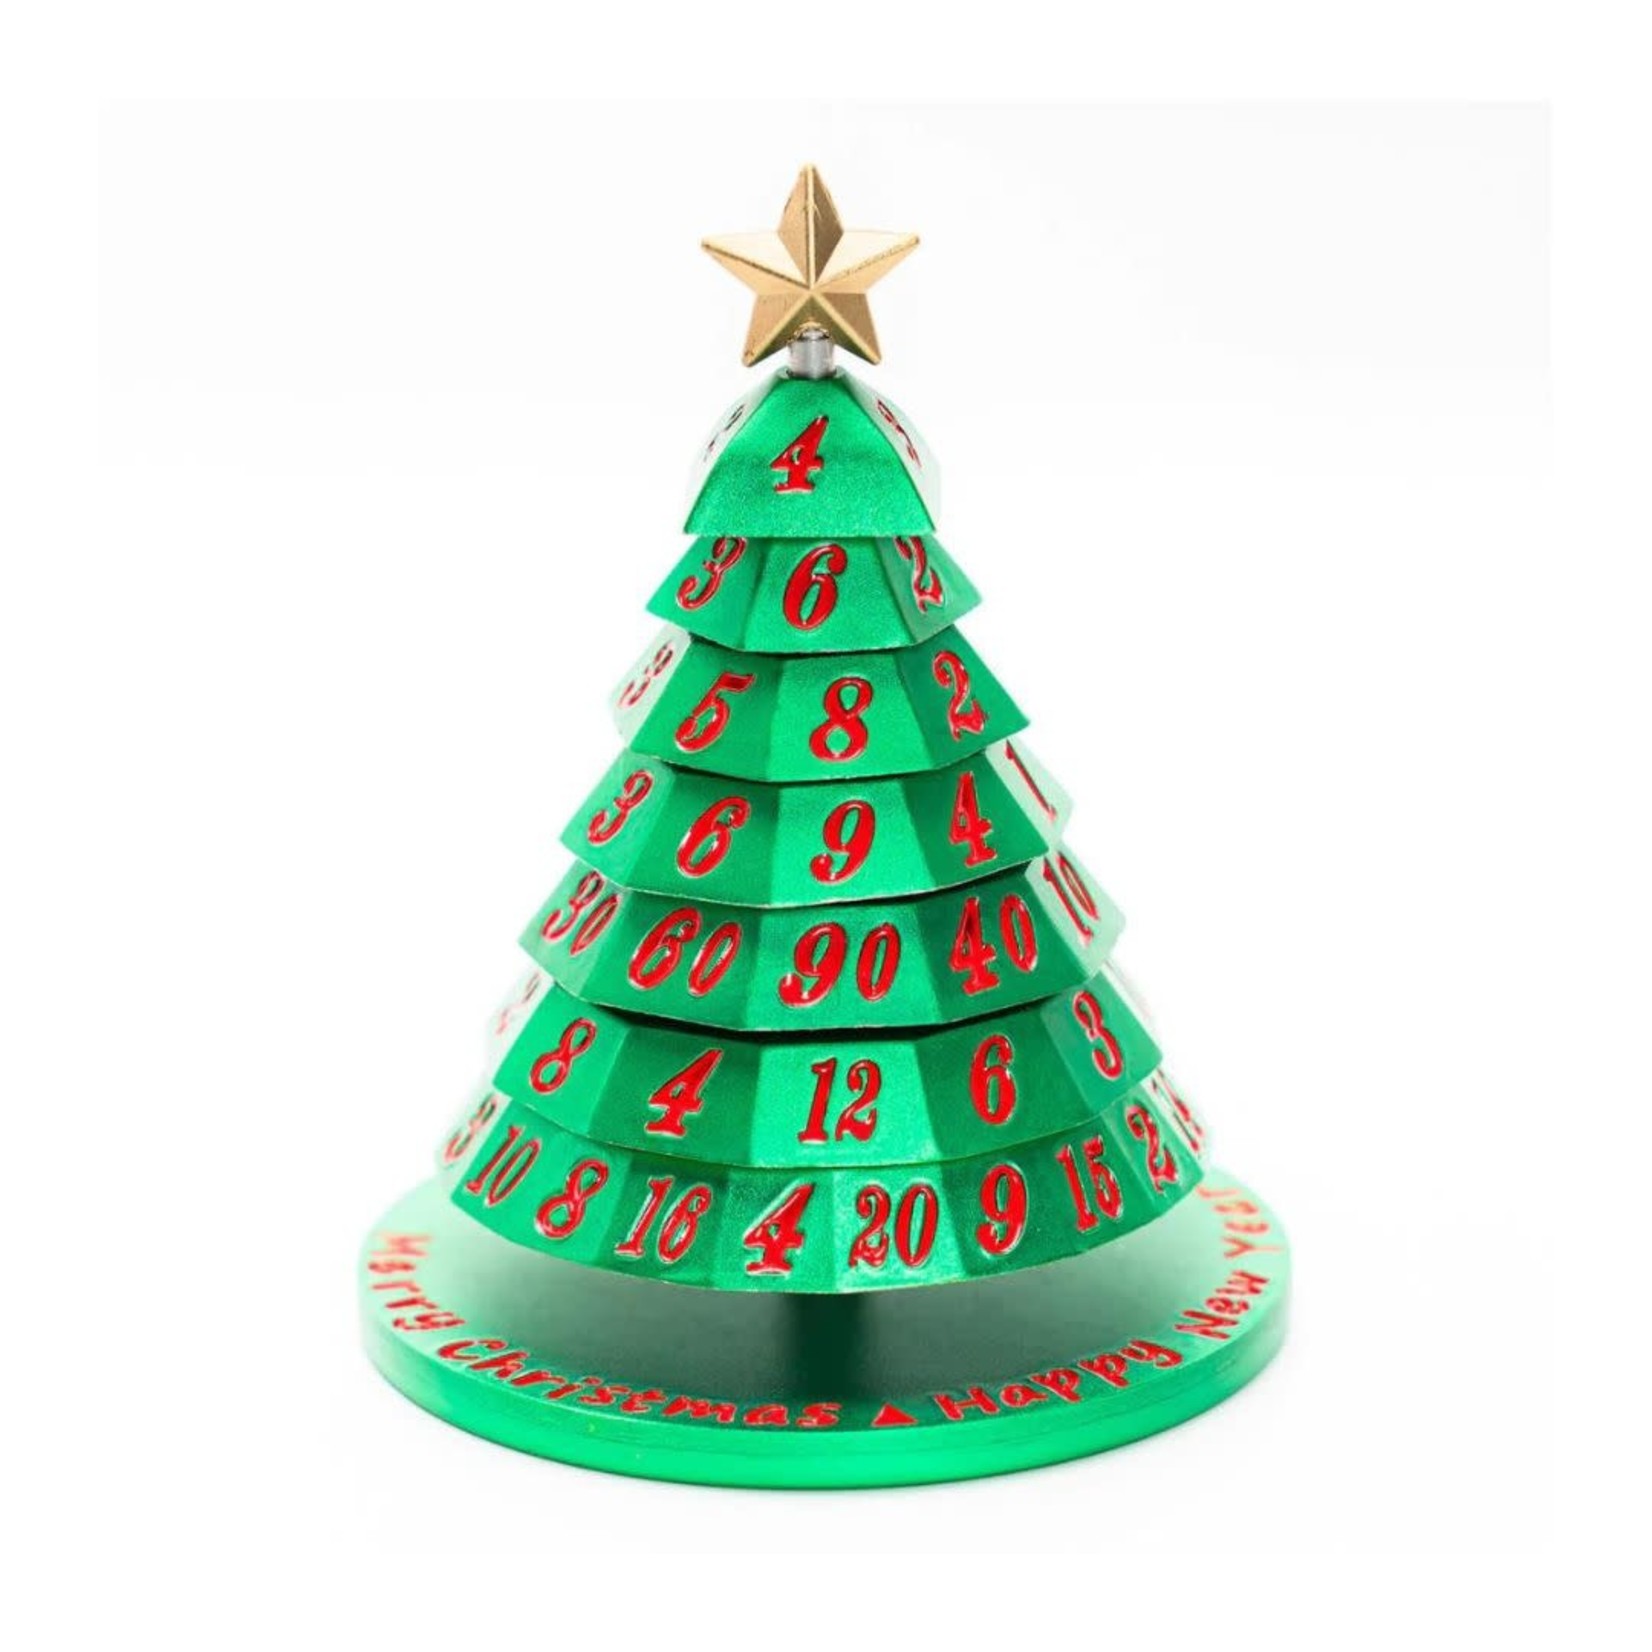 Hymgho Dice US 7-Level Dice Set: Christmas Tree Design (Green)